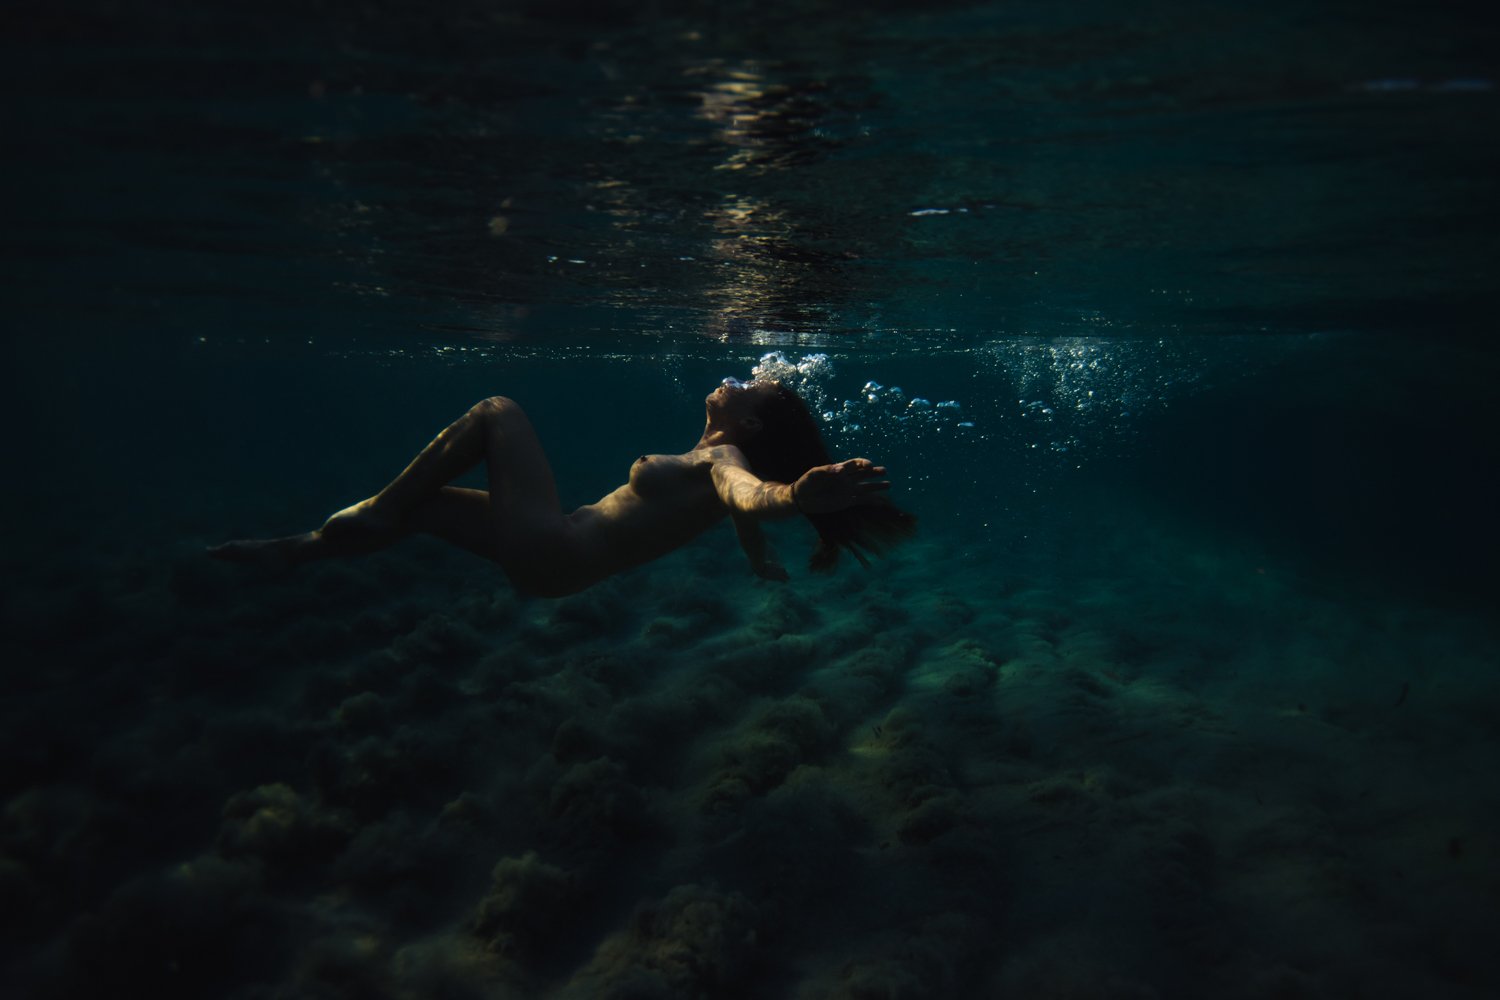 underwater corse corsica sea mediterranean island france french photographer photographe ajaccio Krista Espino Capo di feno wave nude nue femme woman fine art photography-75.jpg